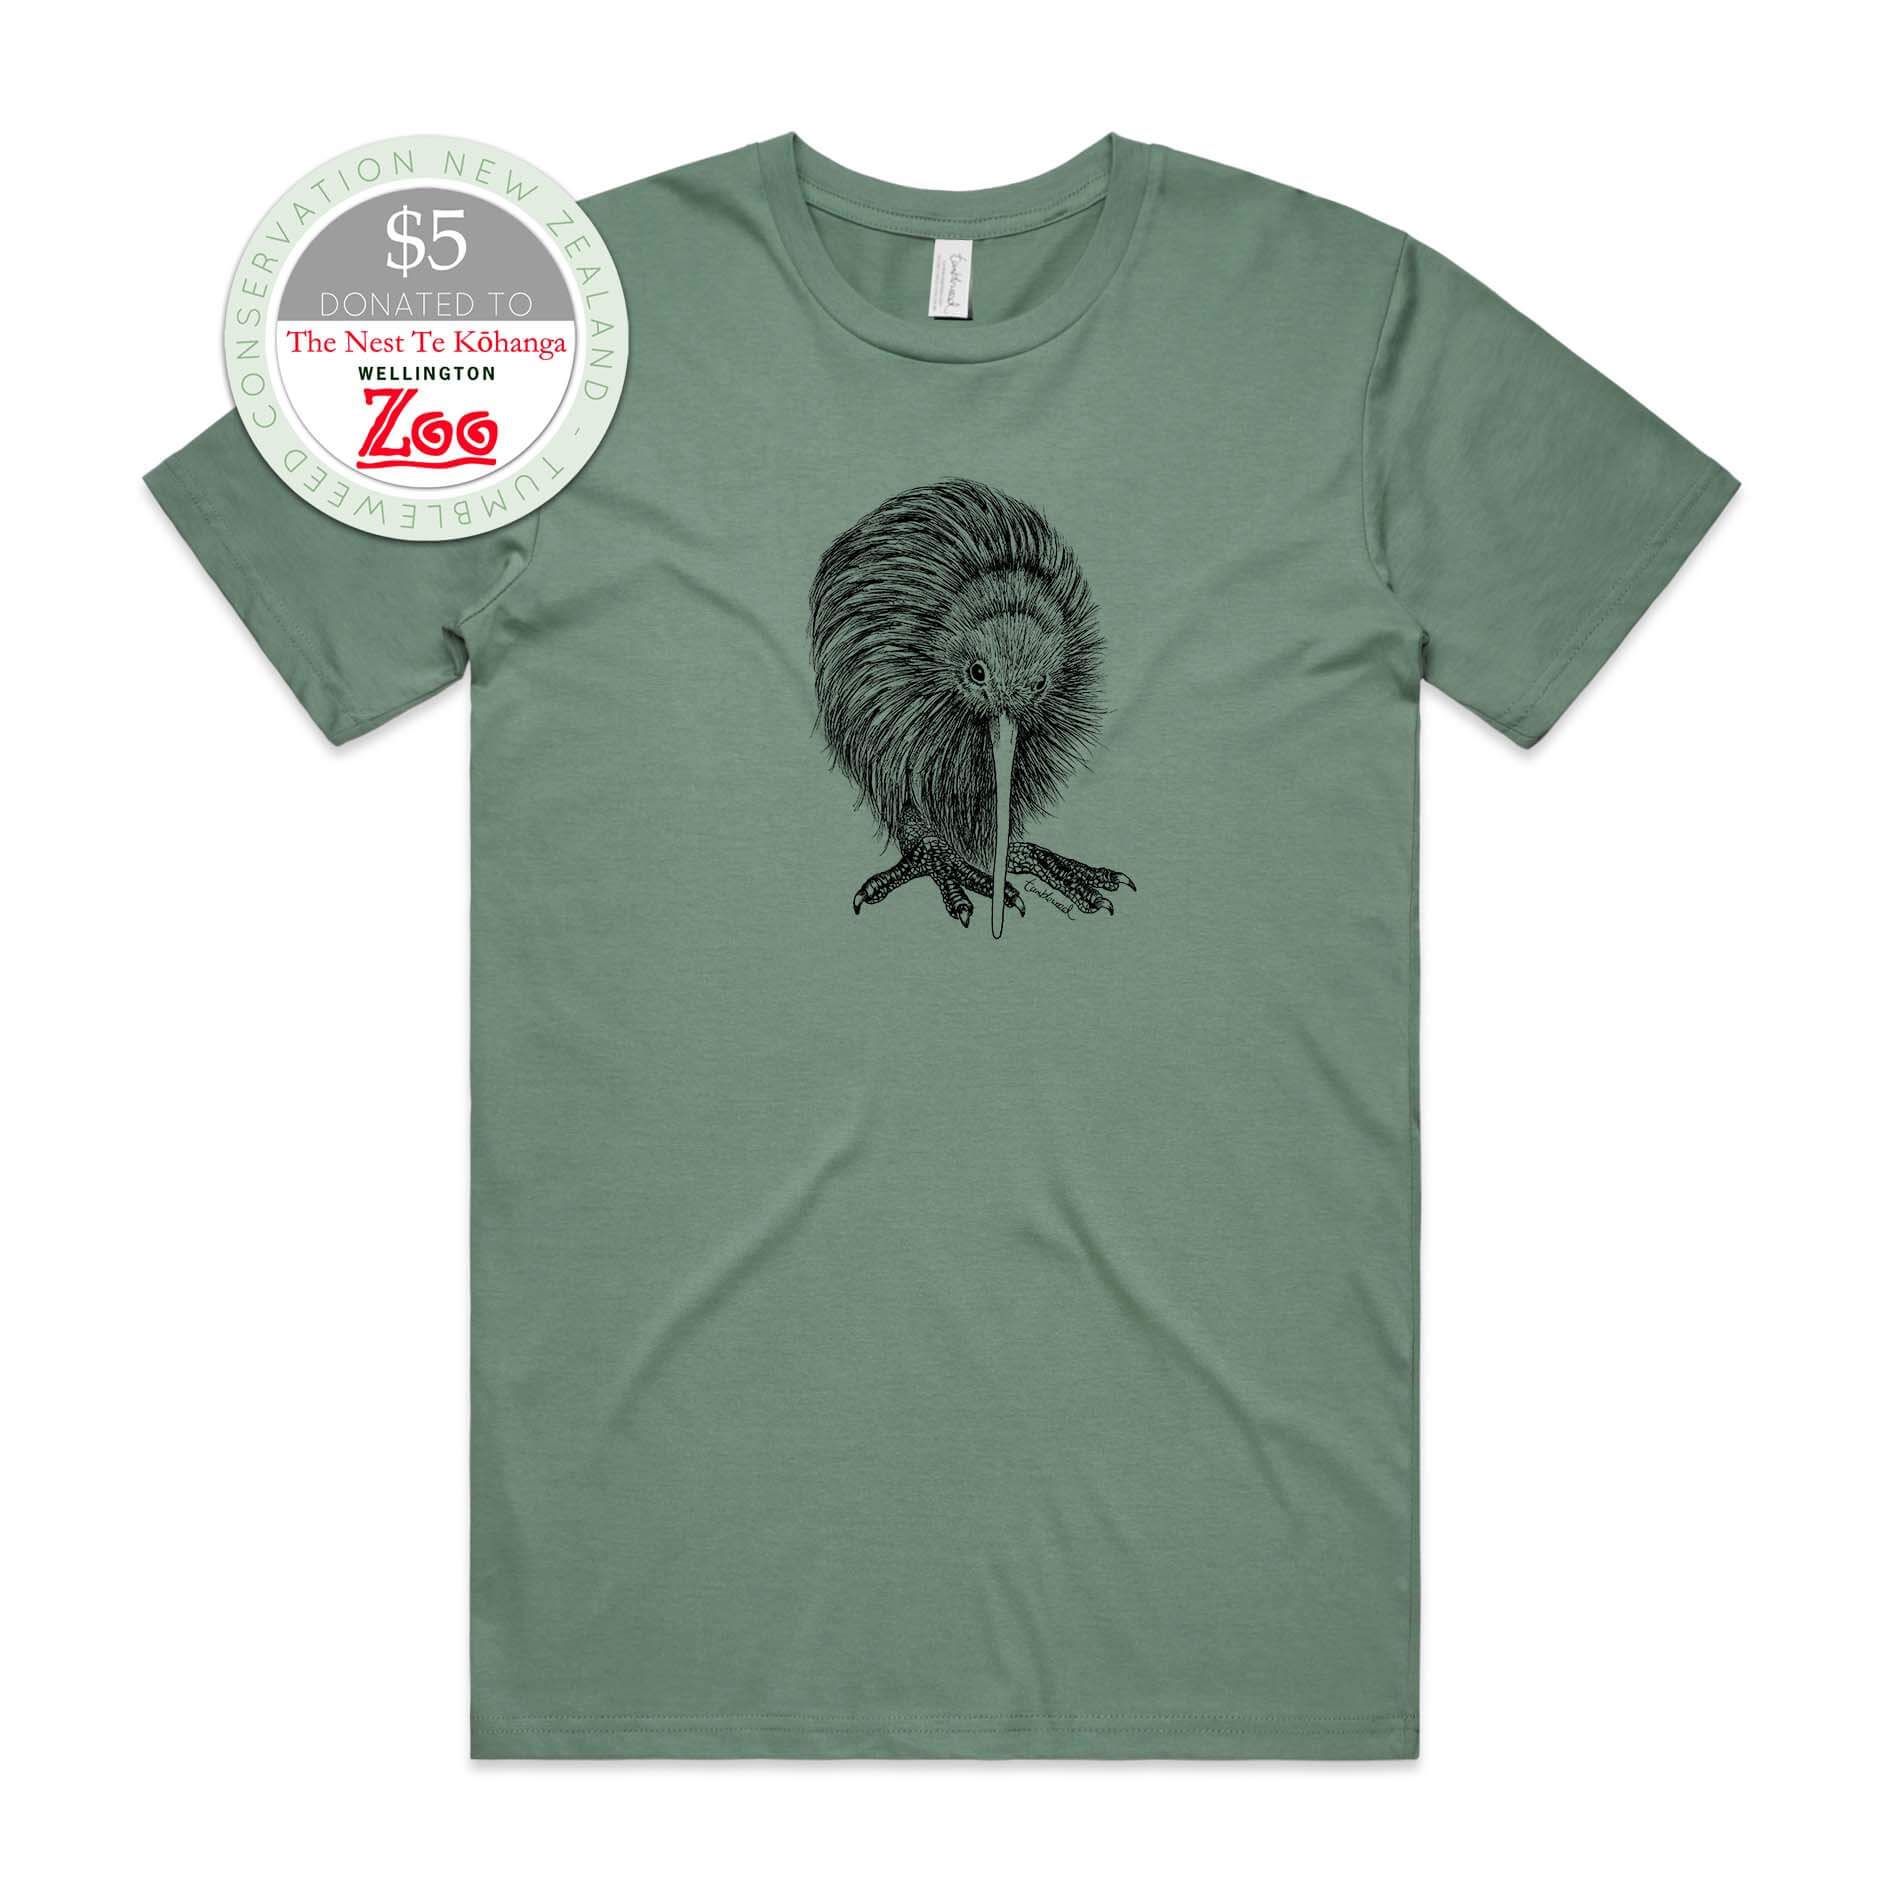 Sage, female t-shirt featuring a screen printed kiwi design.